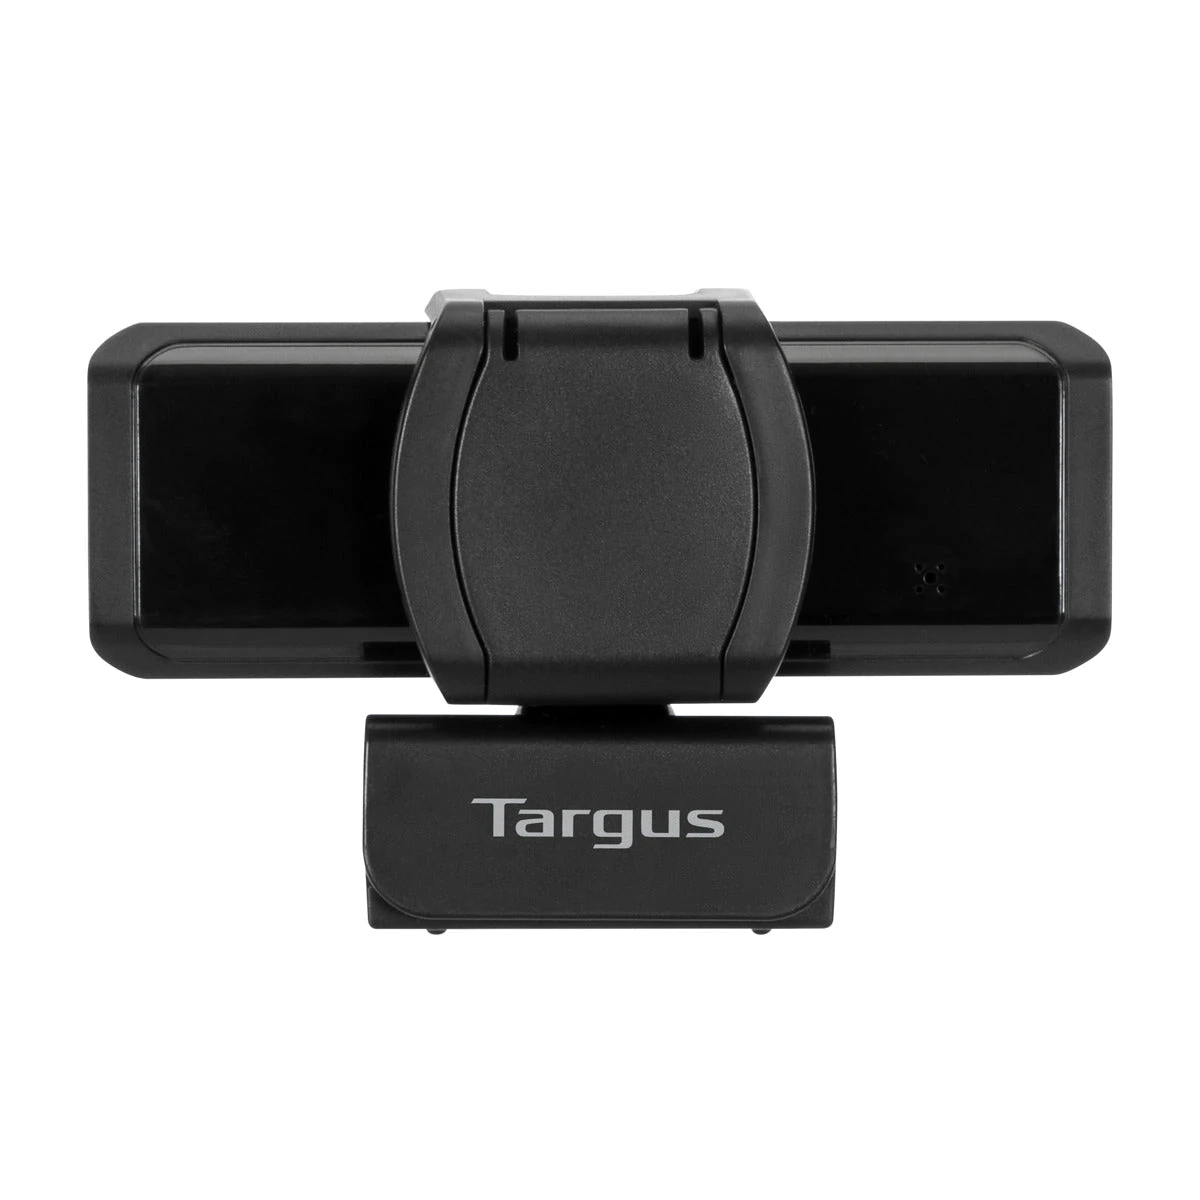 Targus Webcam Pro - Web-Kamera